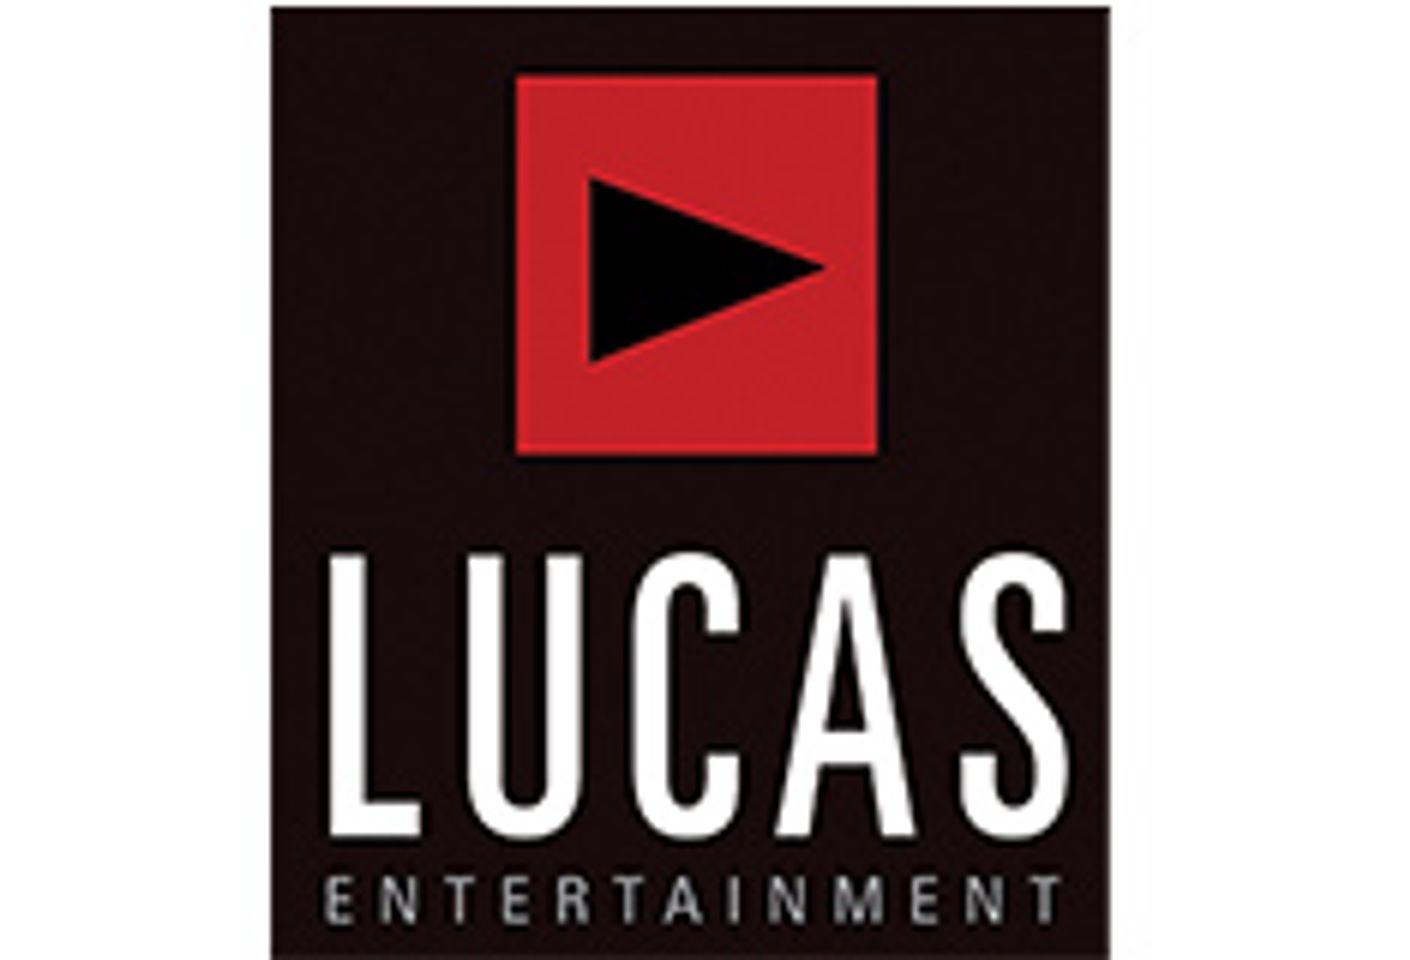 Lucas Entertainment Receives 24 GAYVN Awards Nominations